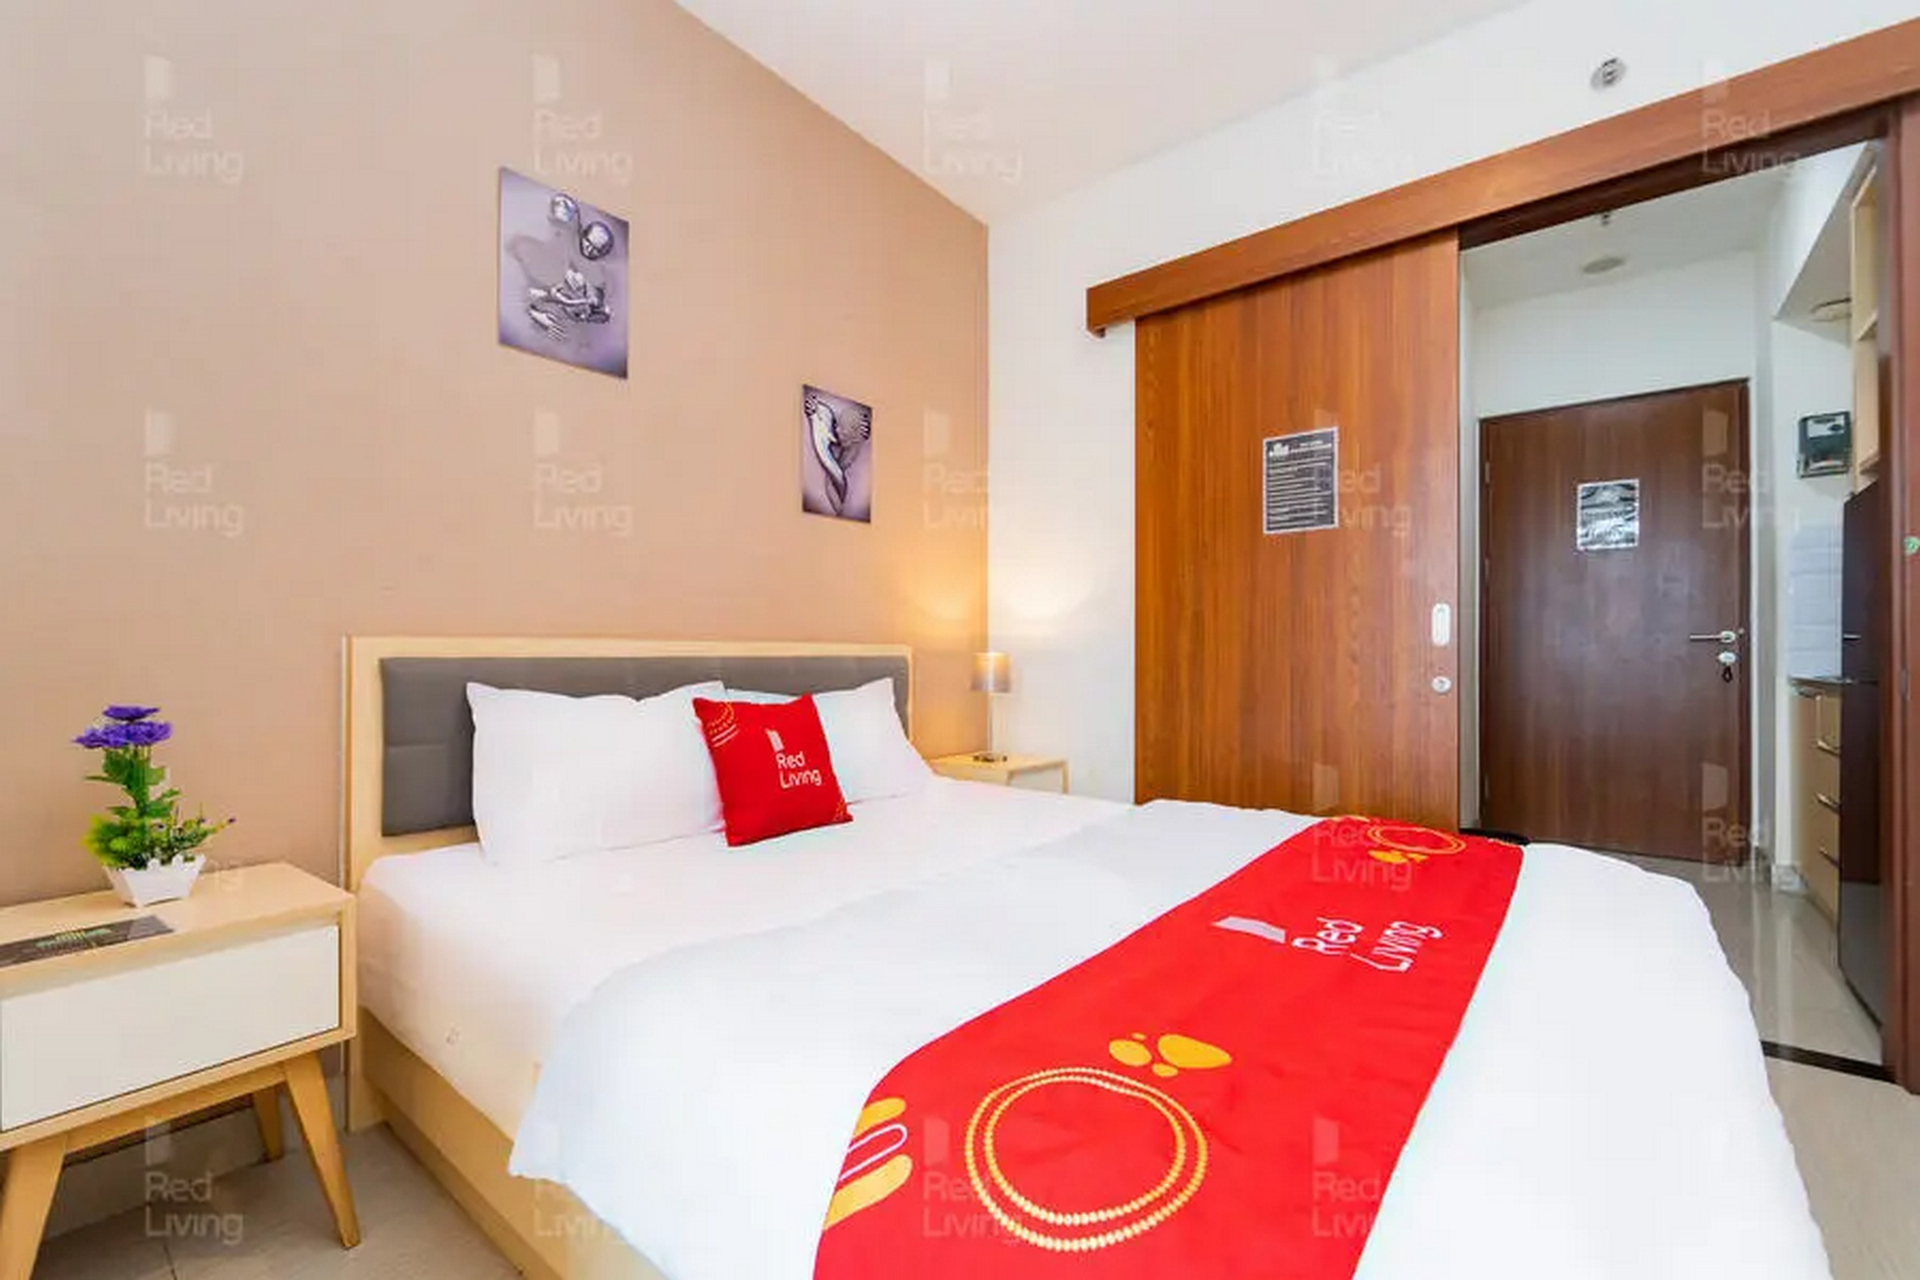 RedLiving Apartemen Grand Kamala Lagoon - Icha Rooms Tower Barclay South with Netflix, Bekasi